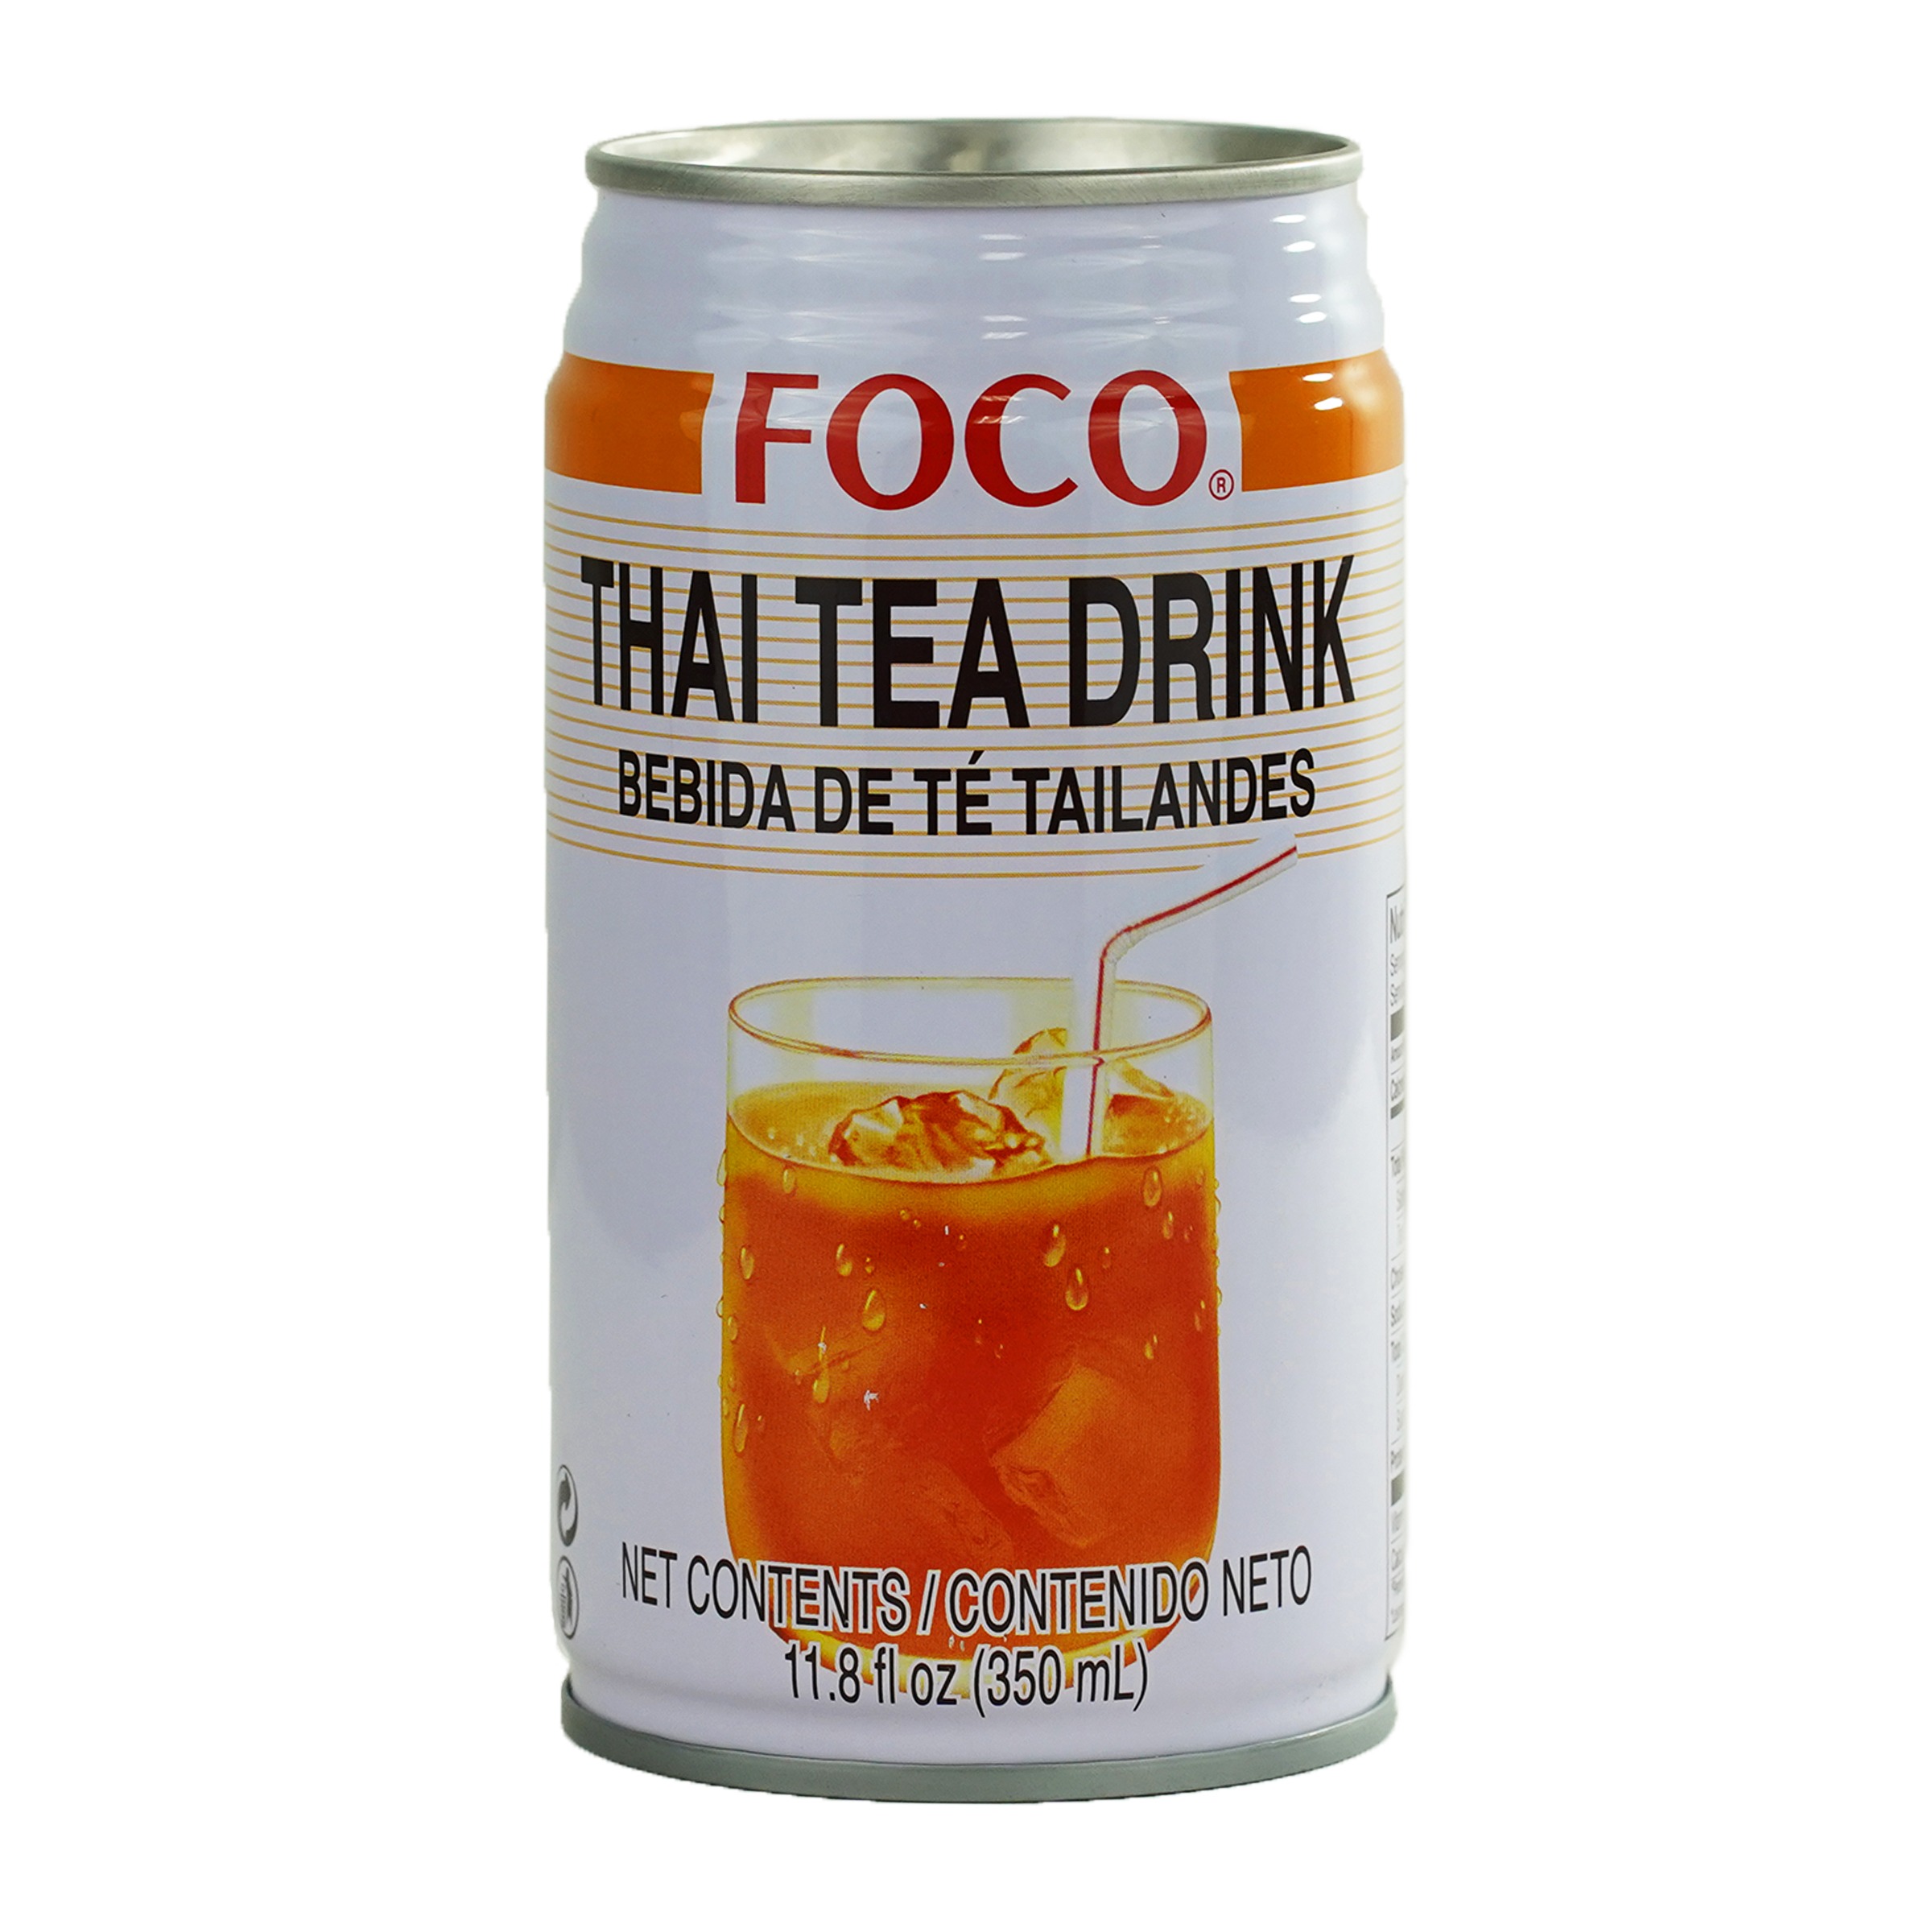 https://vifonusa.com/wp-content/uploads/2020/10/FOCO-THAI-TEA-DRINK_F-copy.jpg